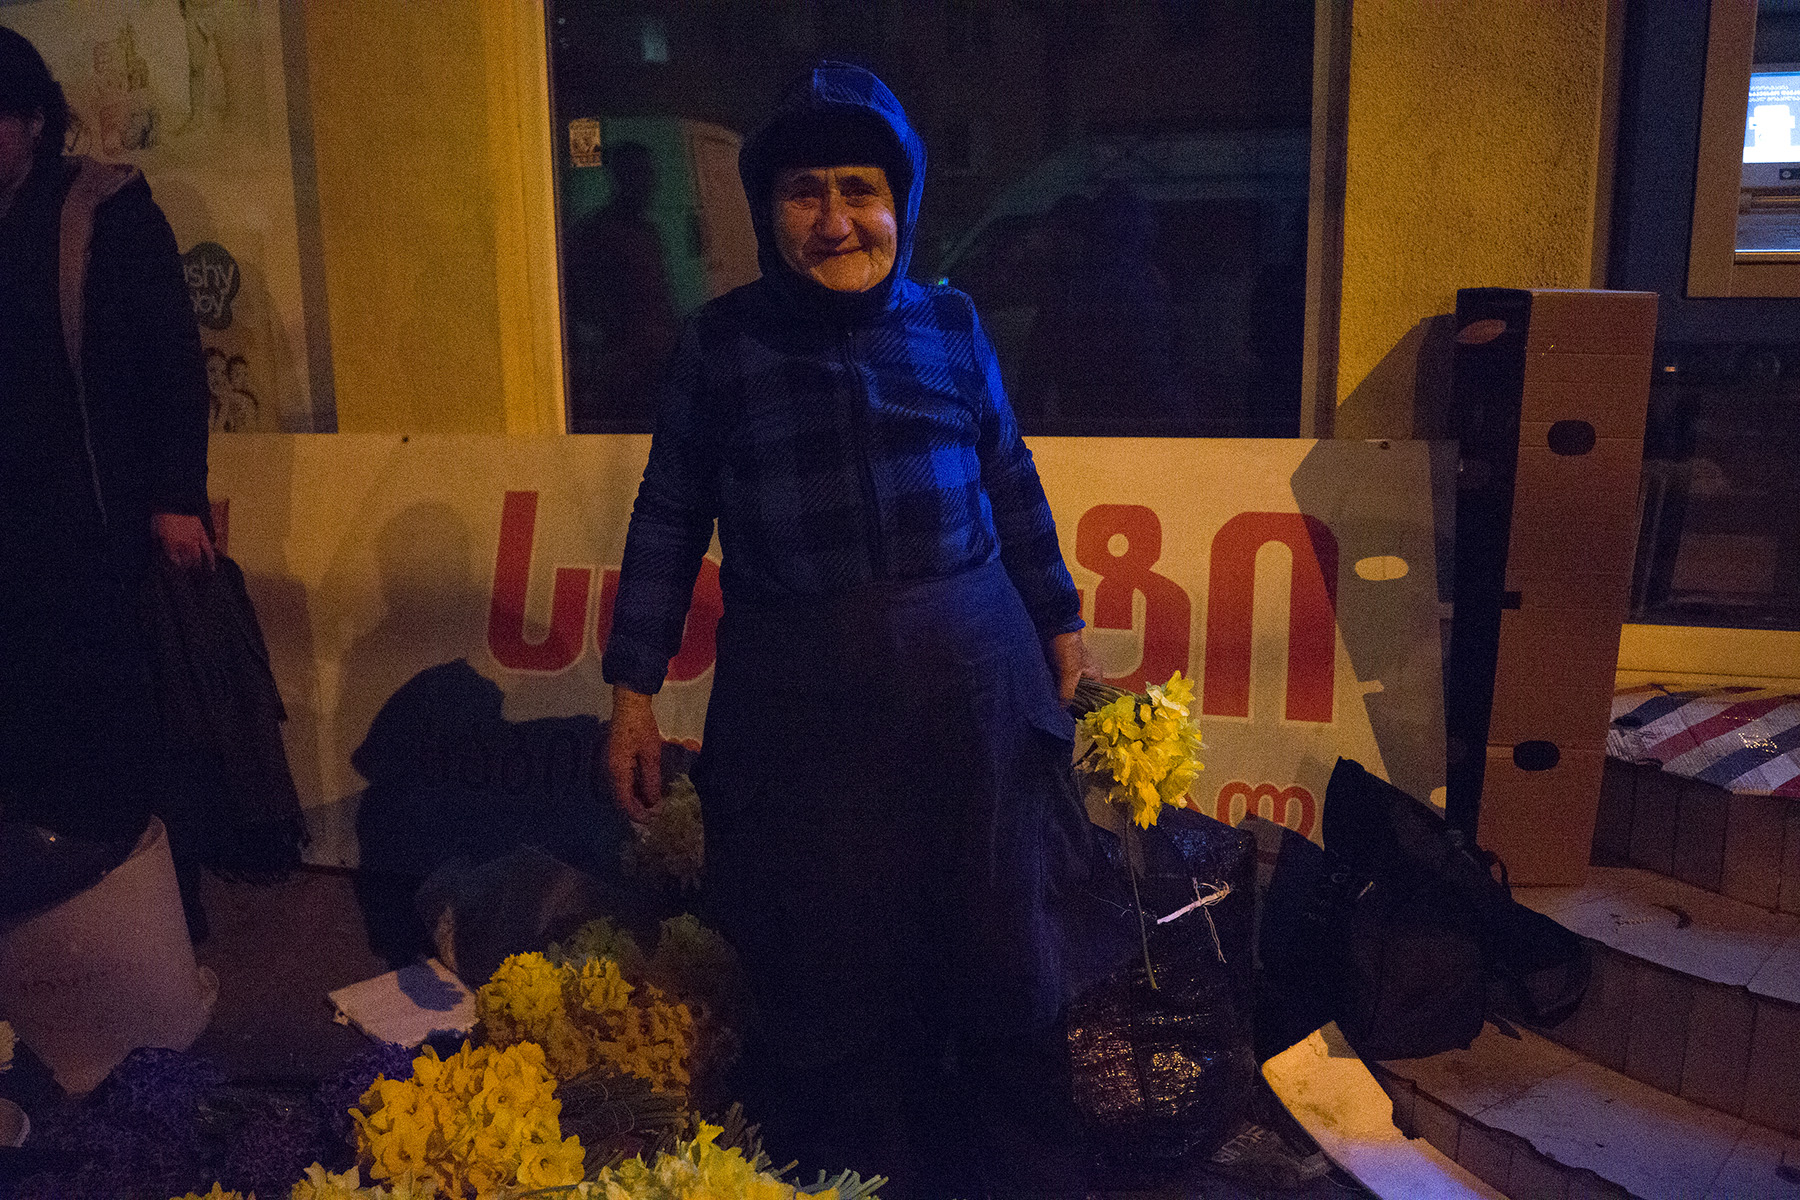 Laura travels from Zugdidi every year to sell flowers on International Women's Day. Photo: Giorgi Rodionov/OC Media.